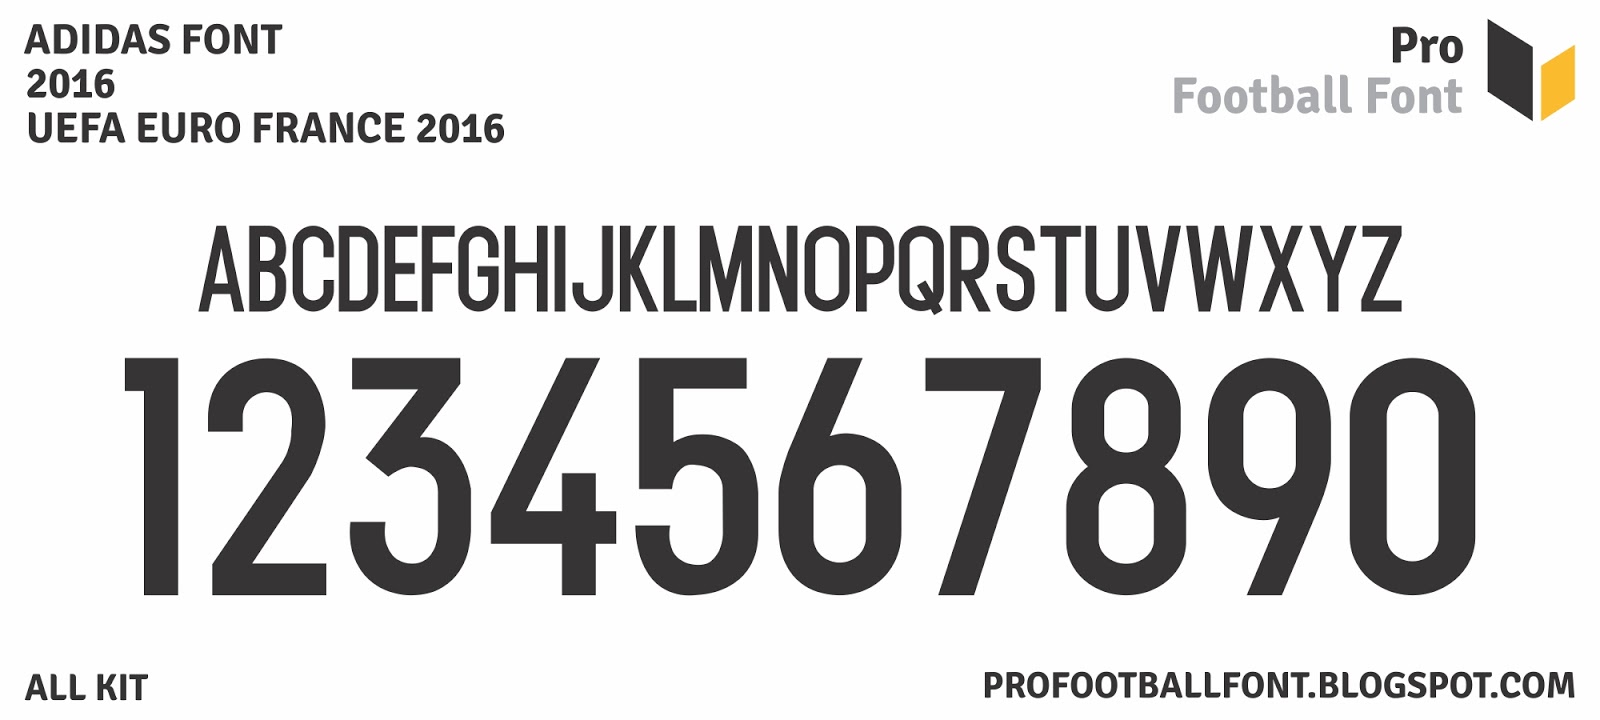 Шрифт адидас. Font adidas 2016. Adidas font 2006. Шрифт adidas 2016 Локомотив.